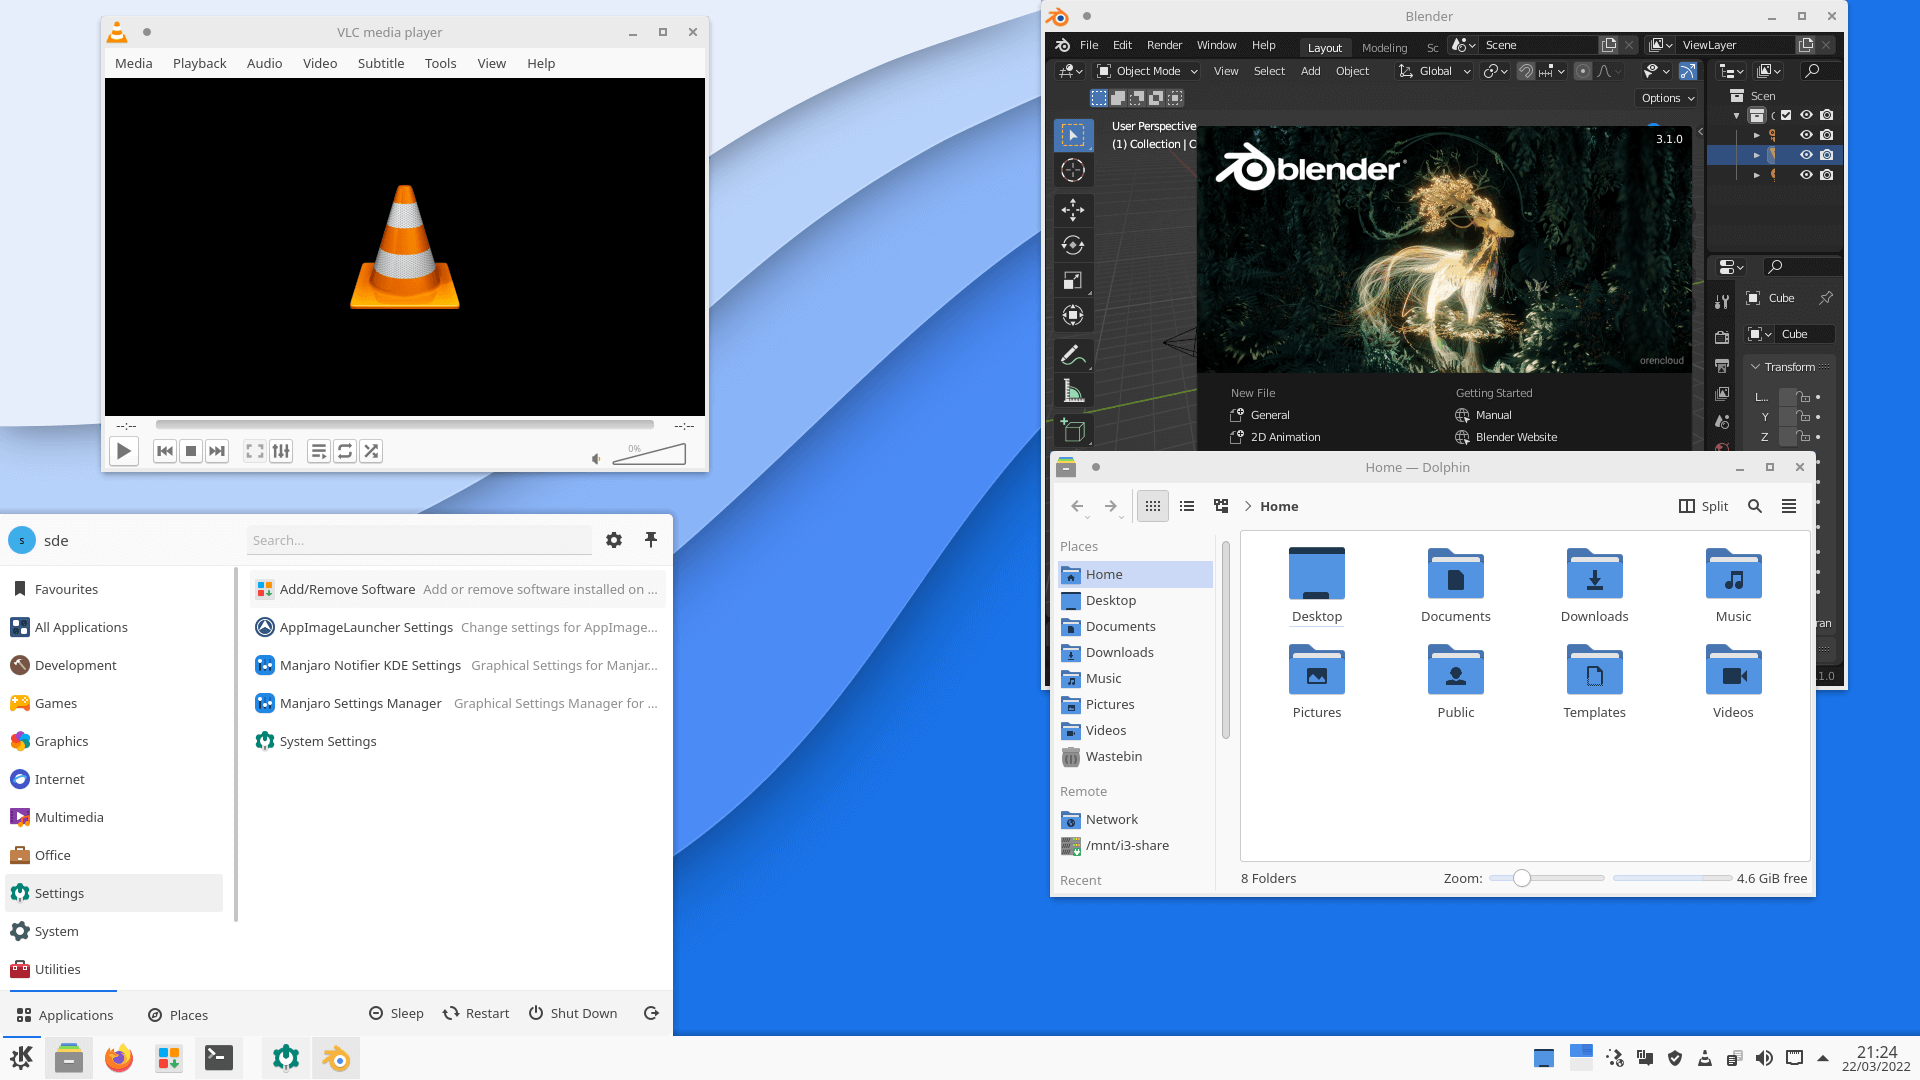 KDE Themes: Materia